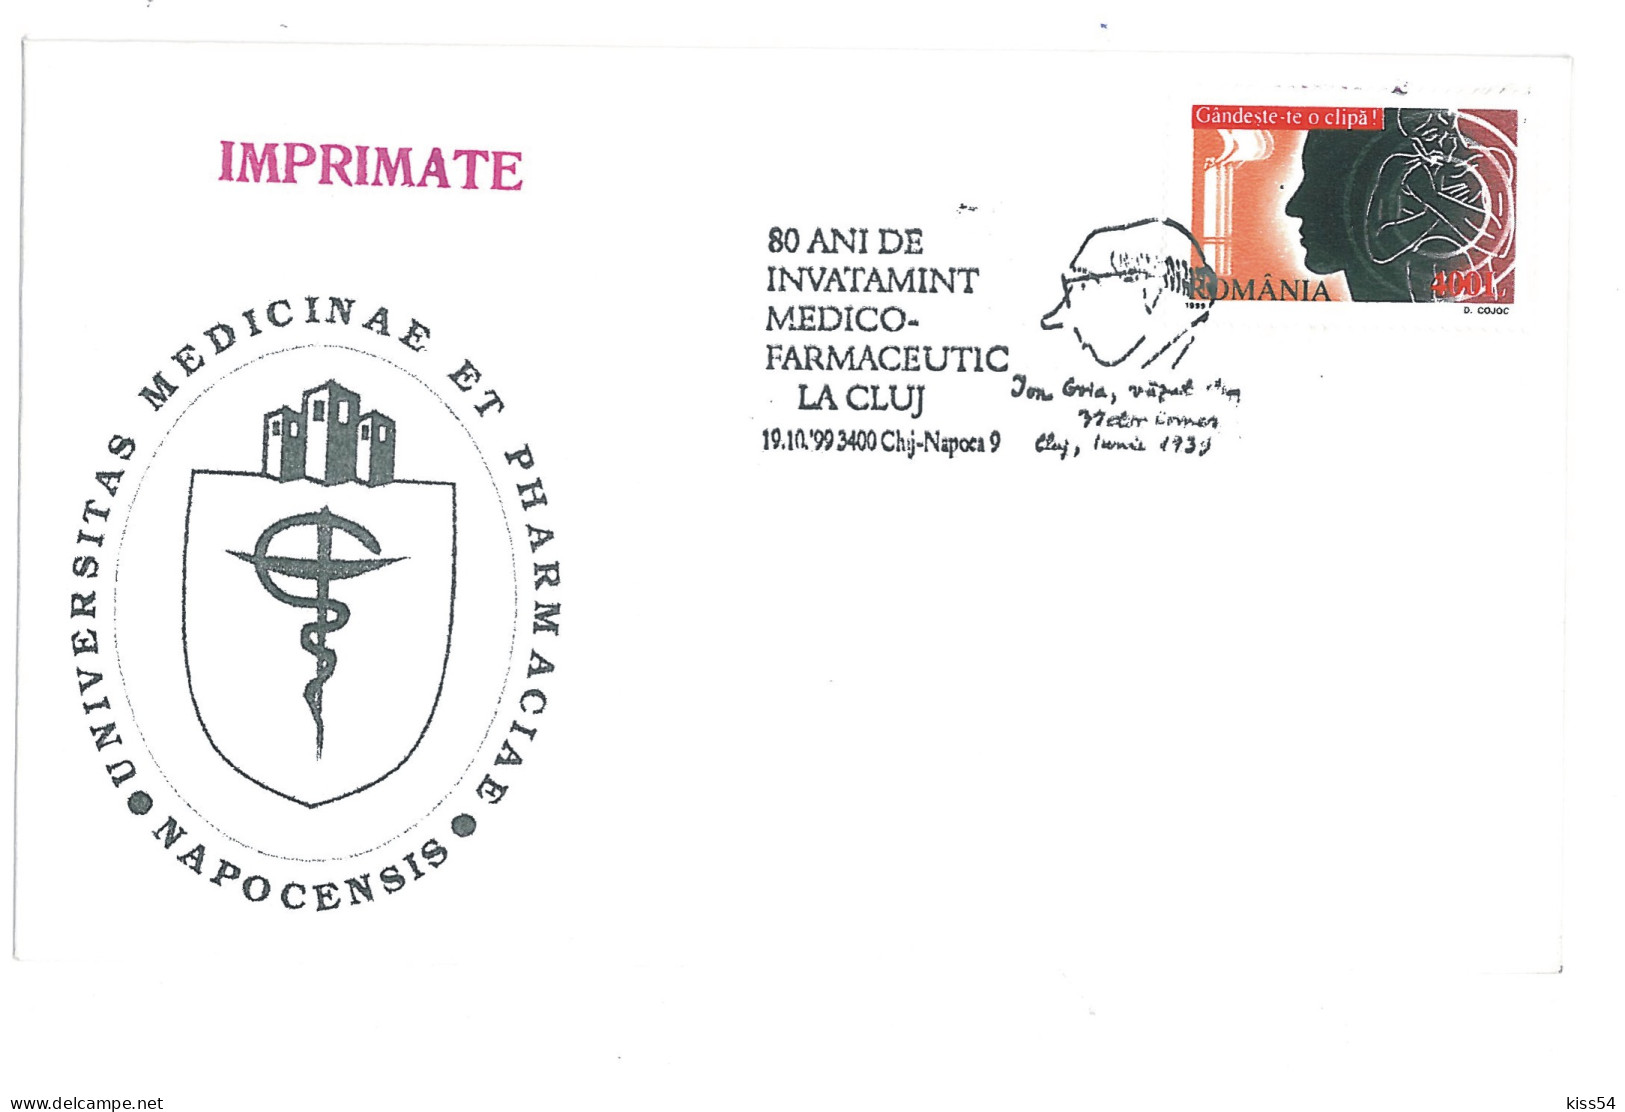 COV 88 - 302 Medical-Pharmaceutical Education, Romania - Cover - Used - 1999 - Pharmacie